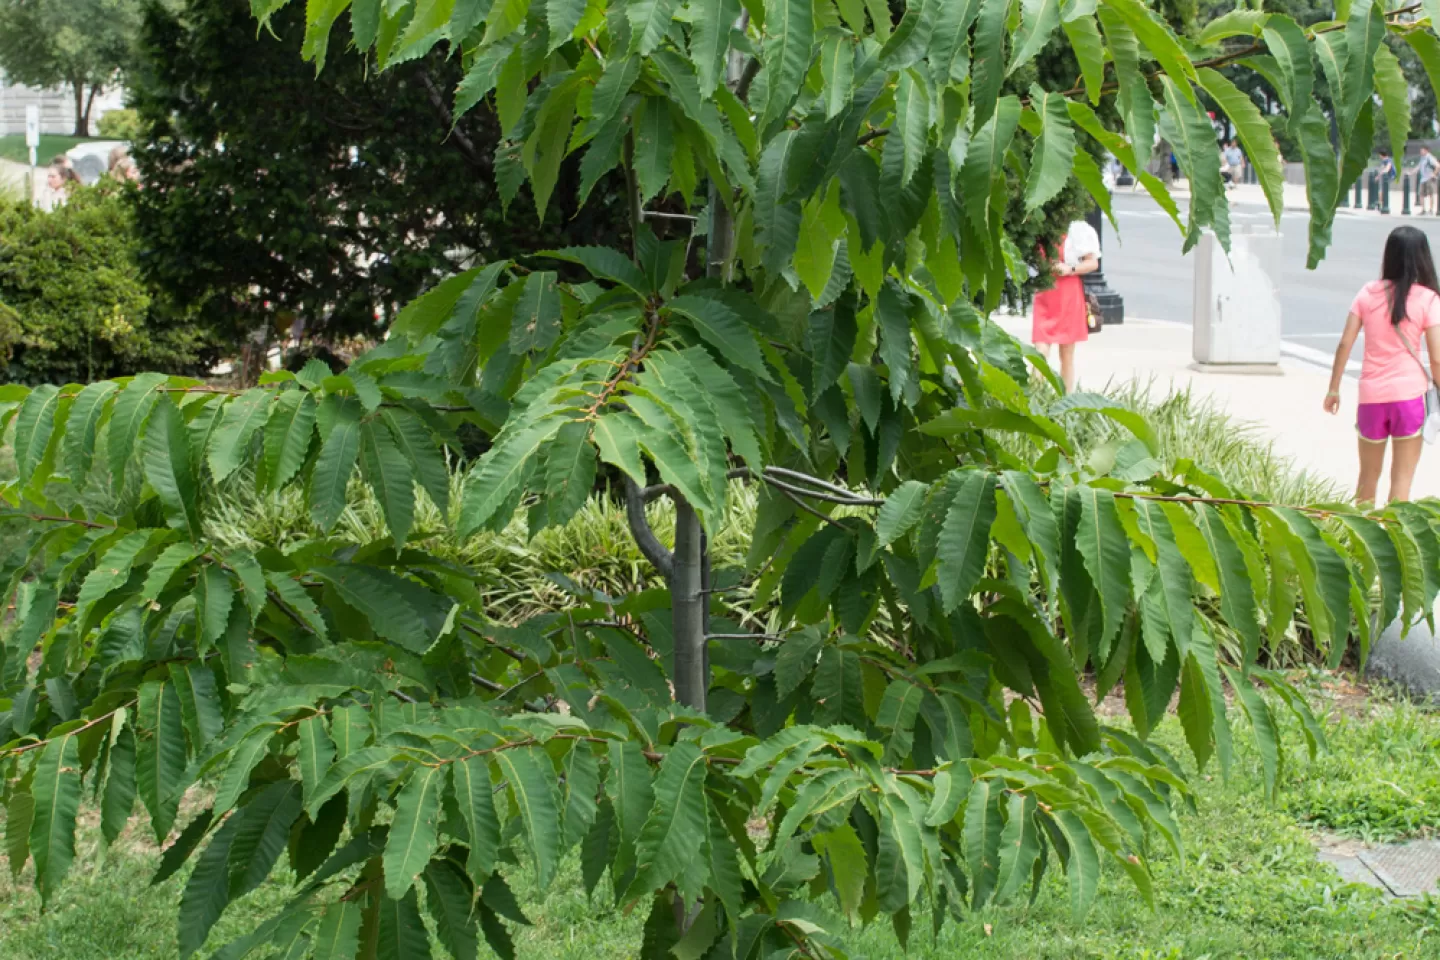 Representative Jack Murtha Tree in summer.